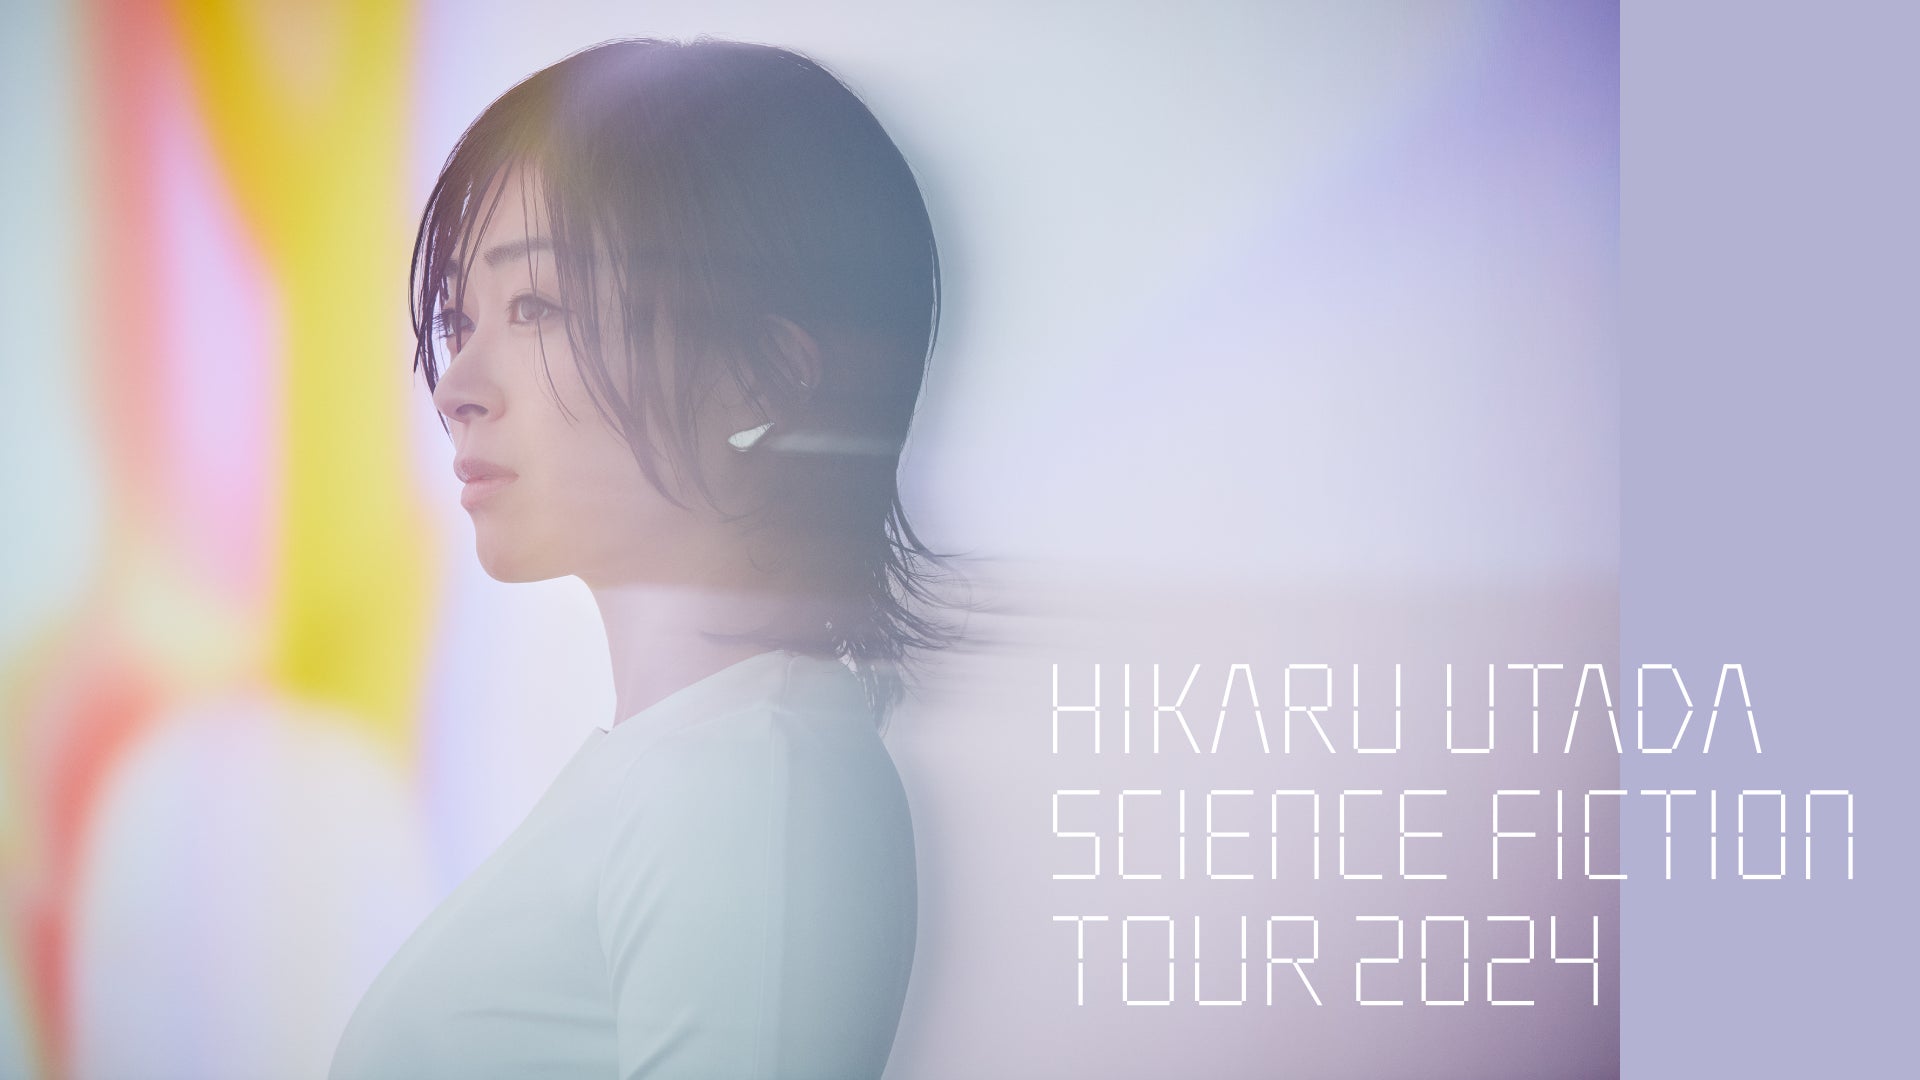 【ONLY ON U-NEXT】宇多田ヒカル 全国ツアー「HIKARU UTADA SCIENCE FICTION TOUR 2024」がU-NEXTにて配信決定！